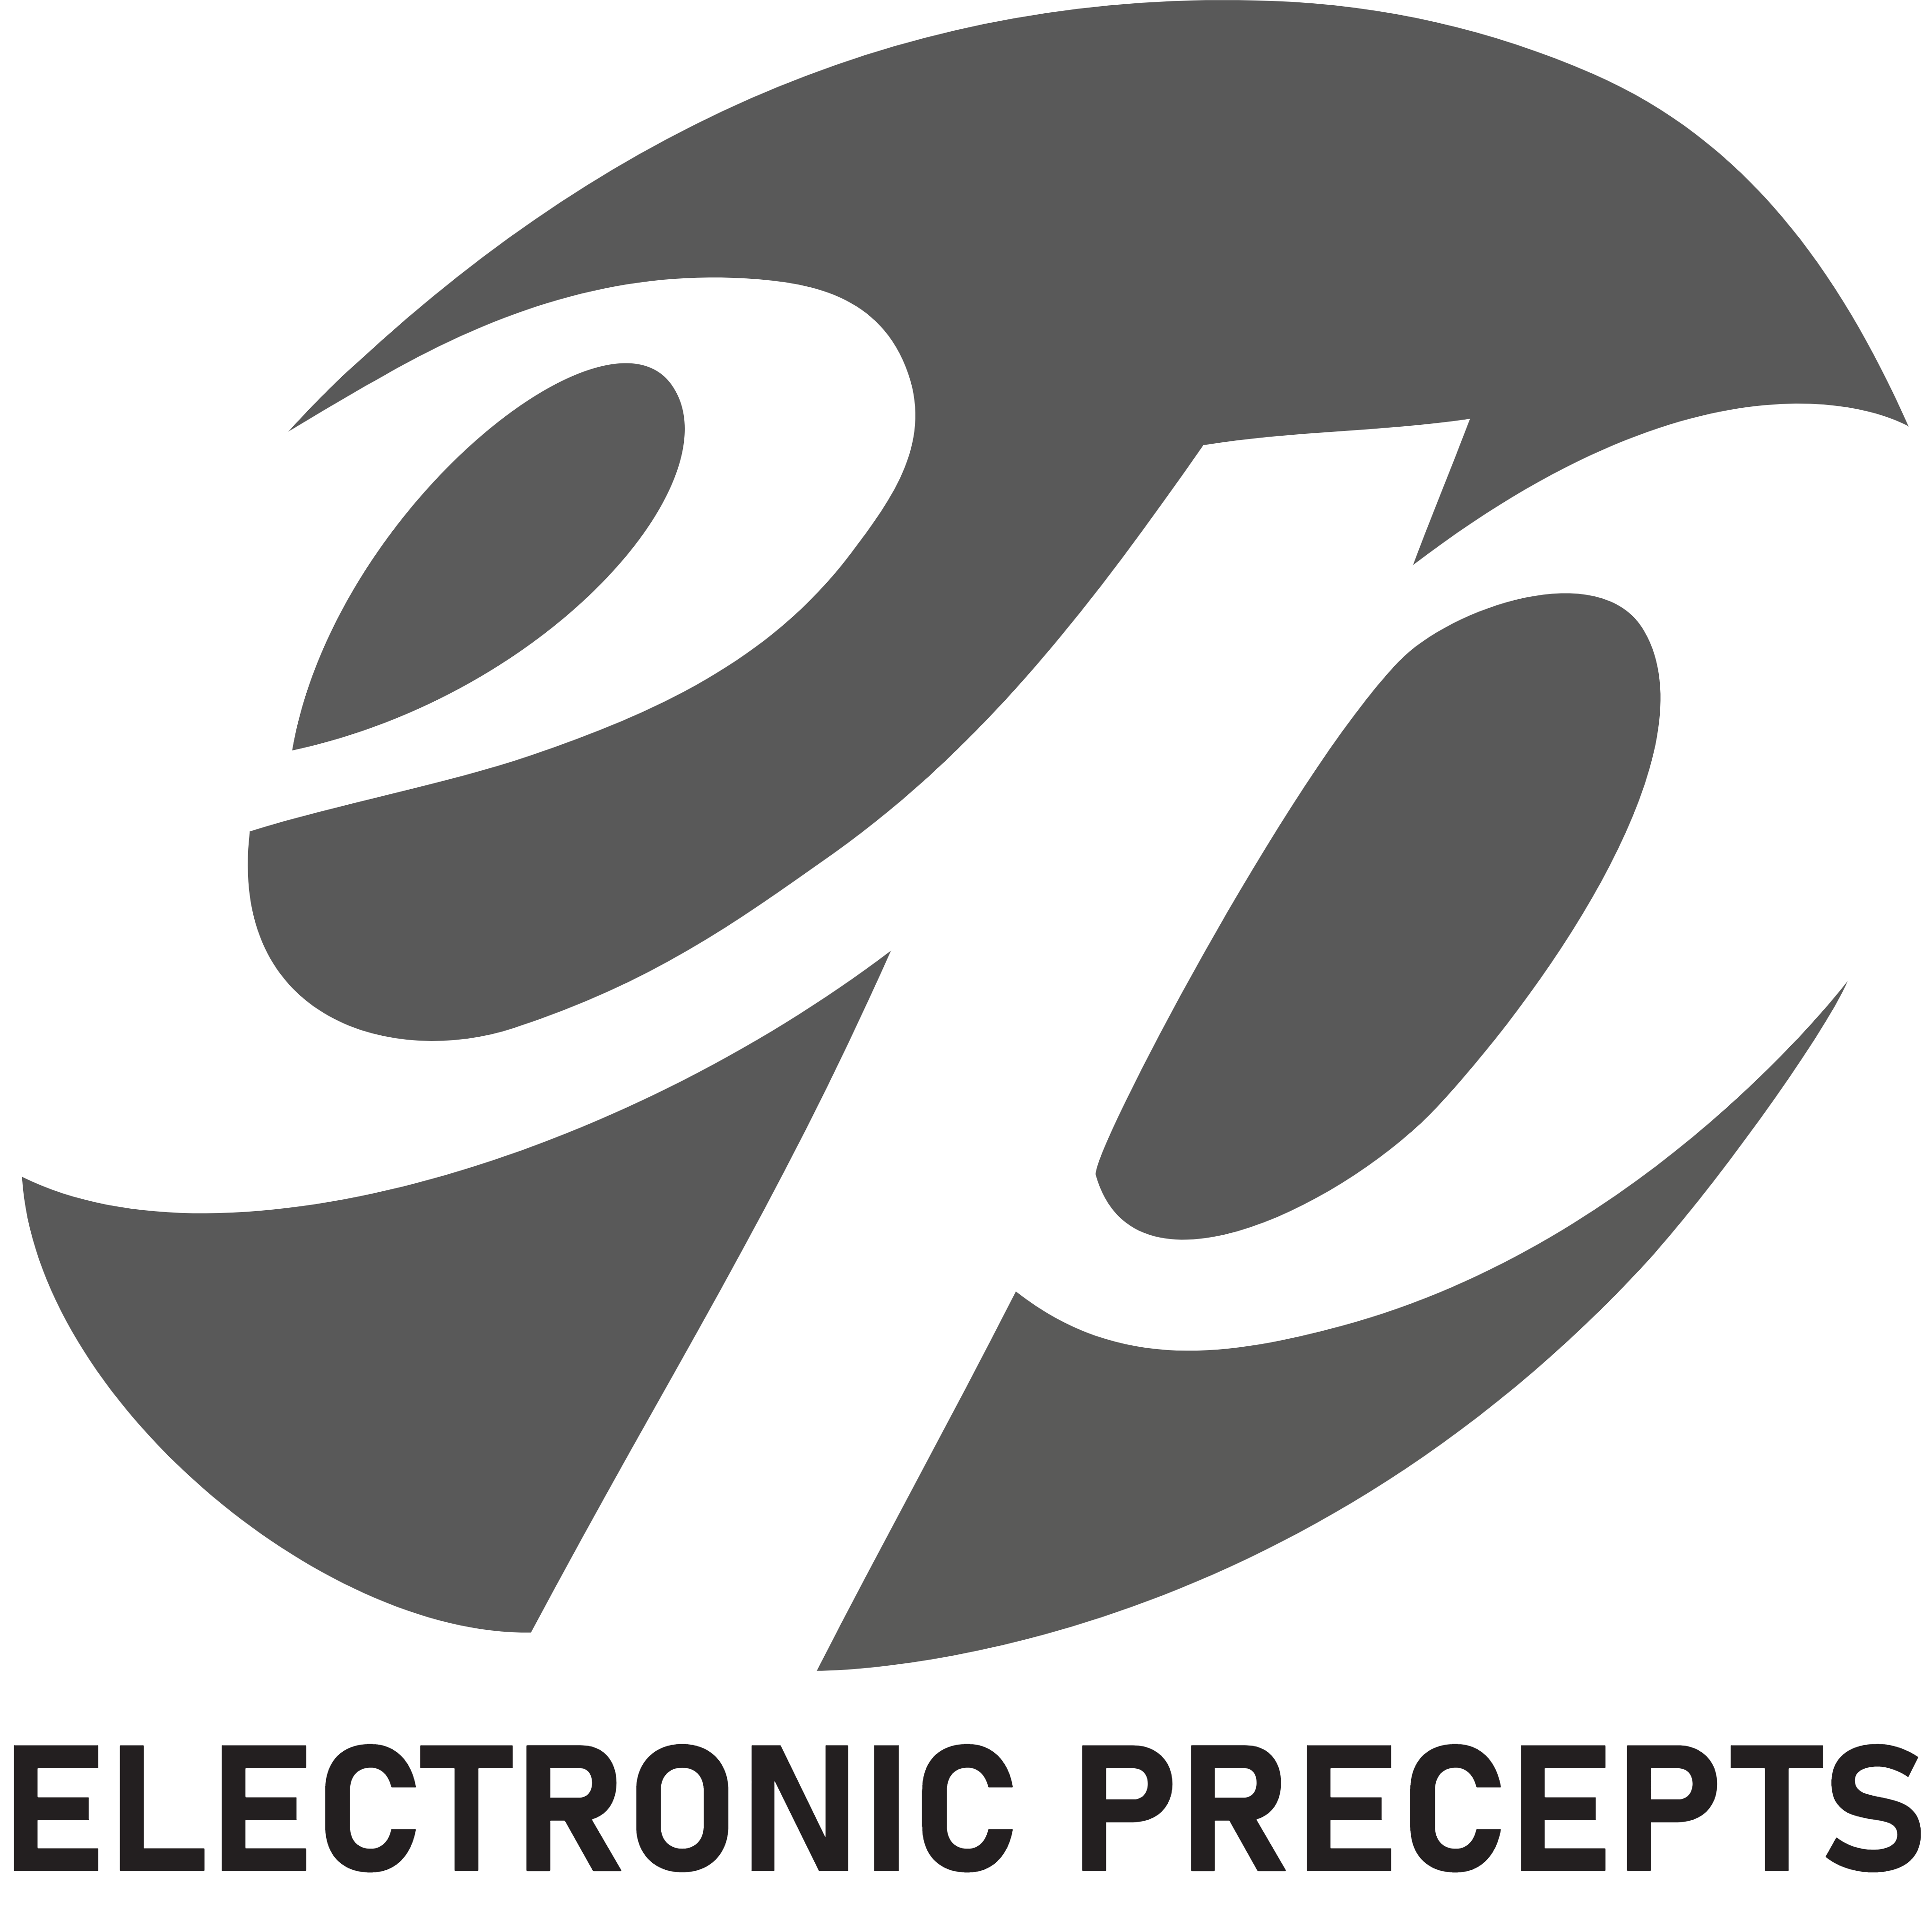 Electronic Precepts logo